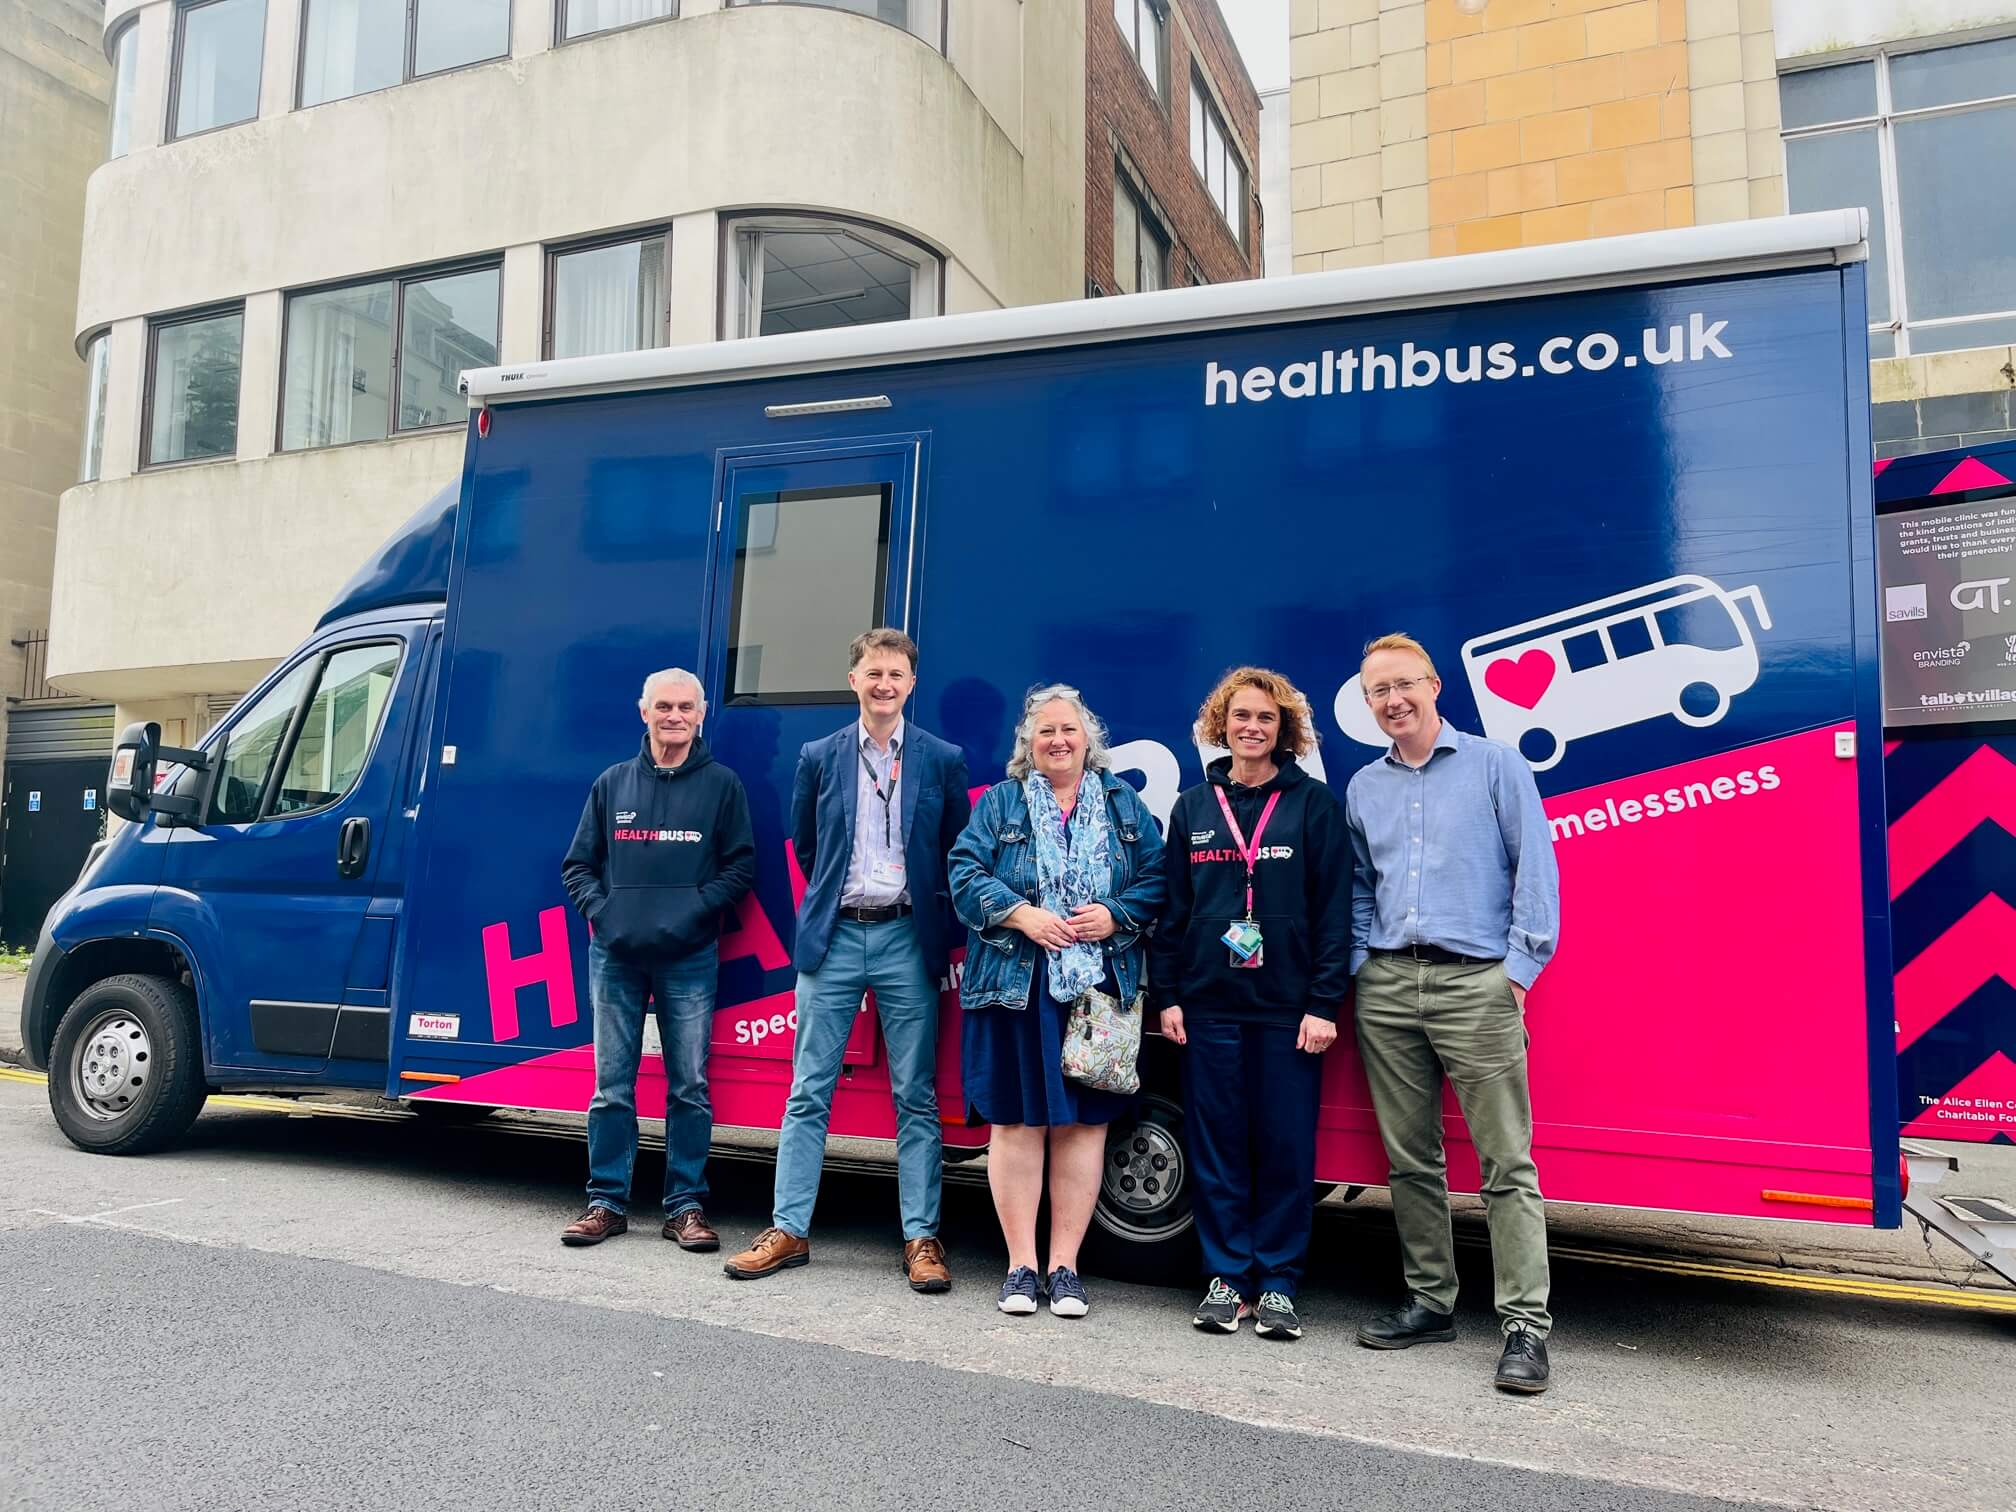 HealthBus team standing in front of HealthBus